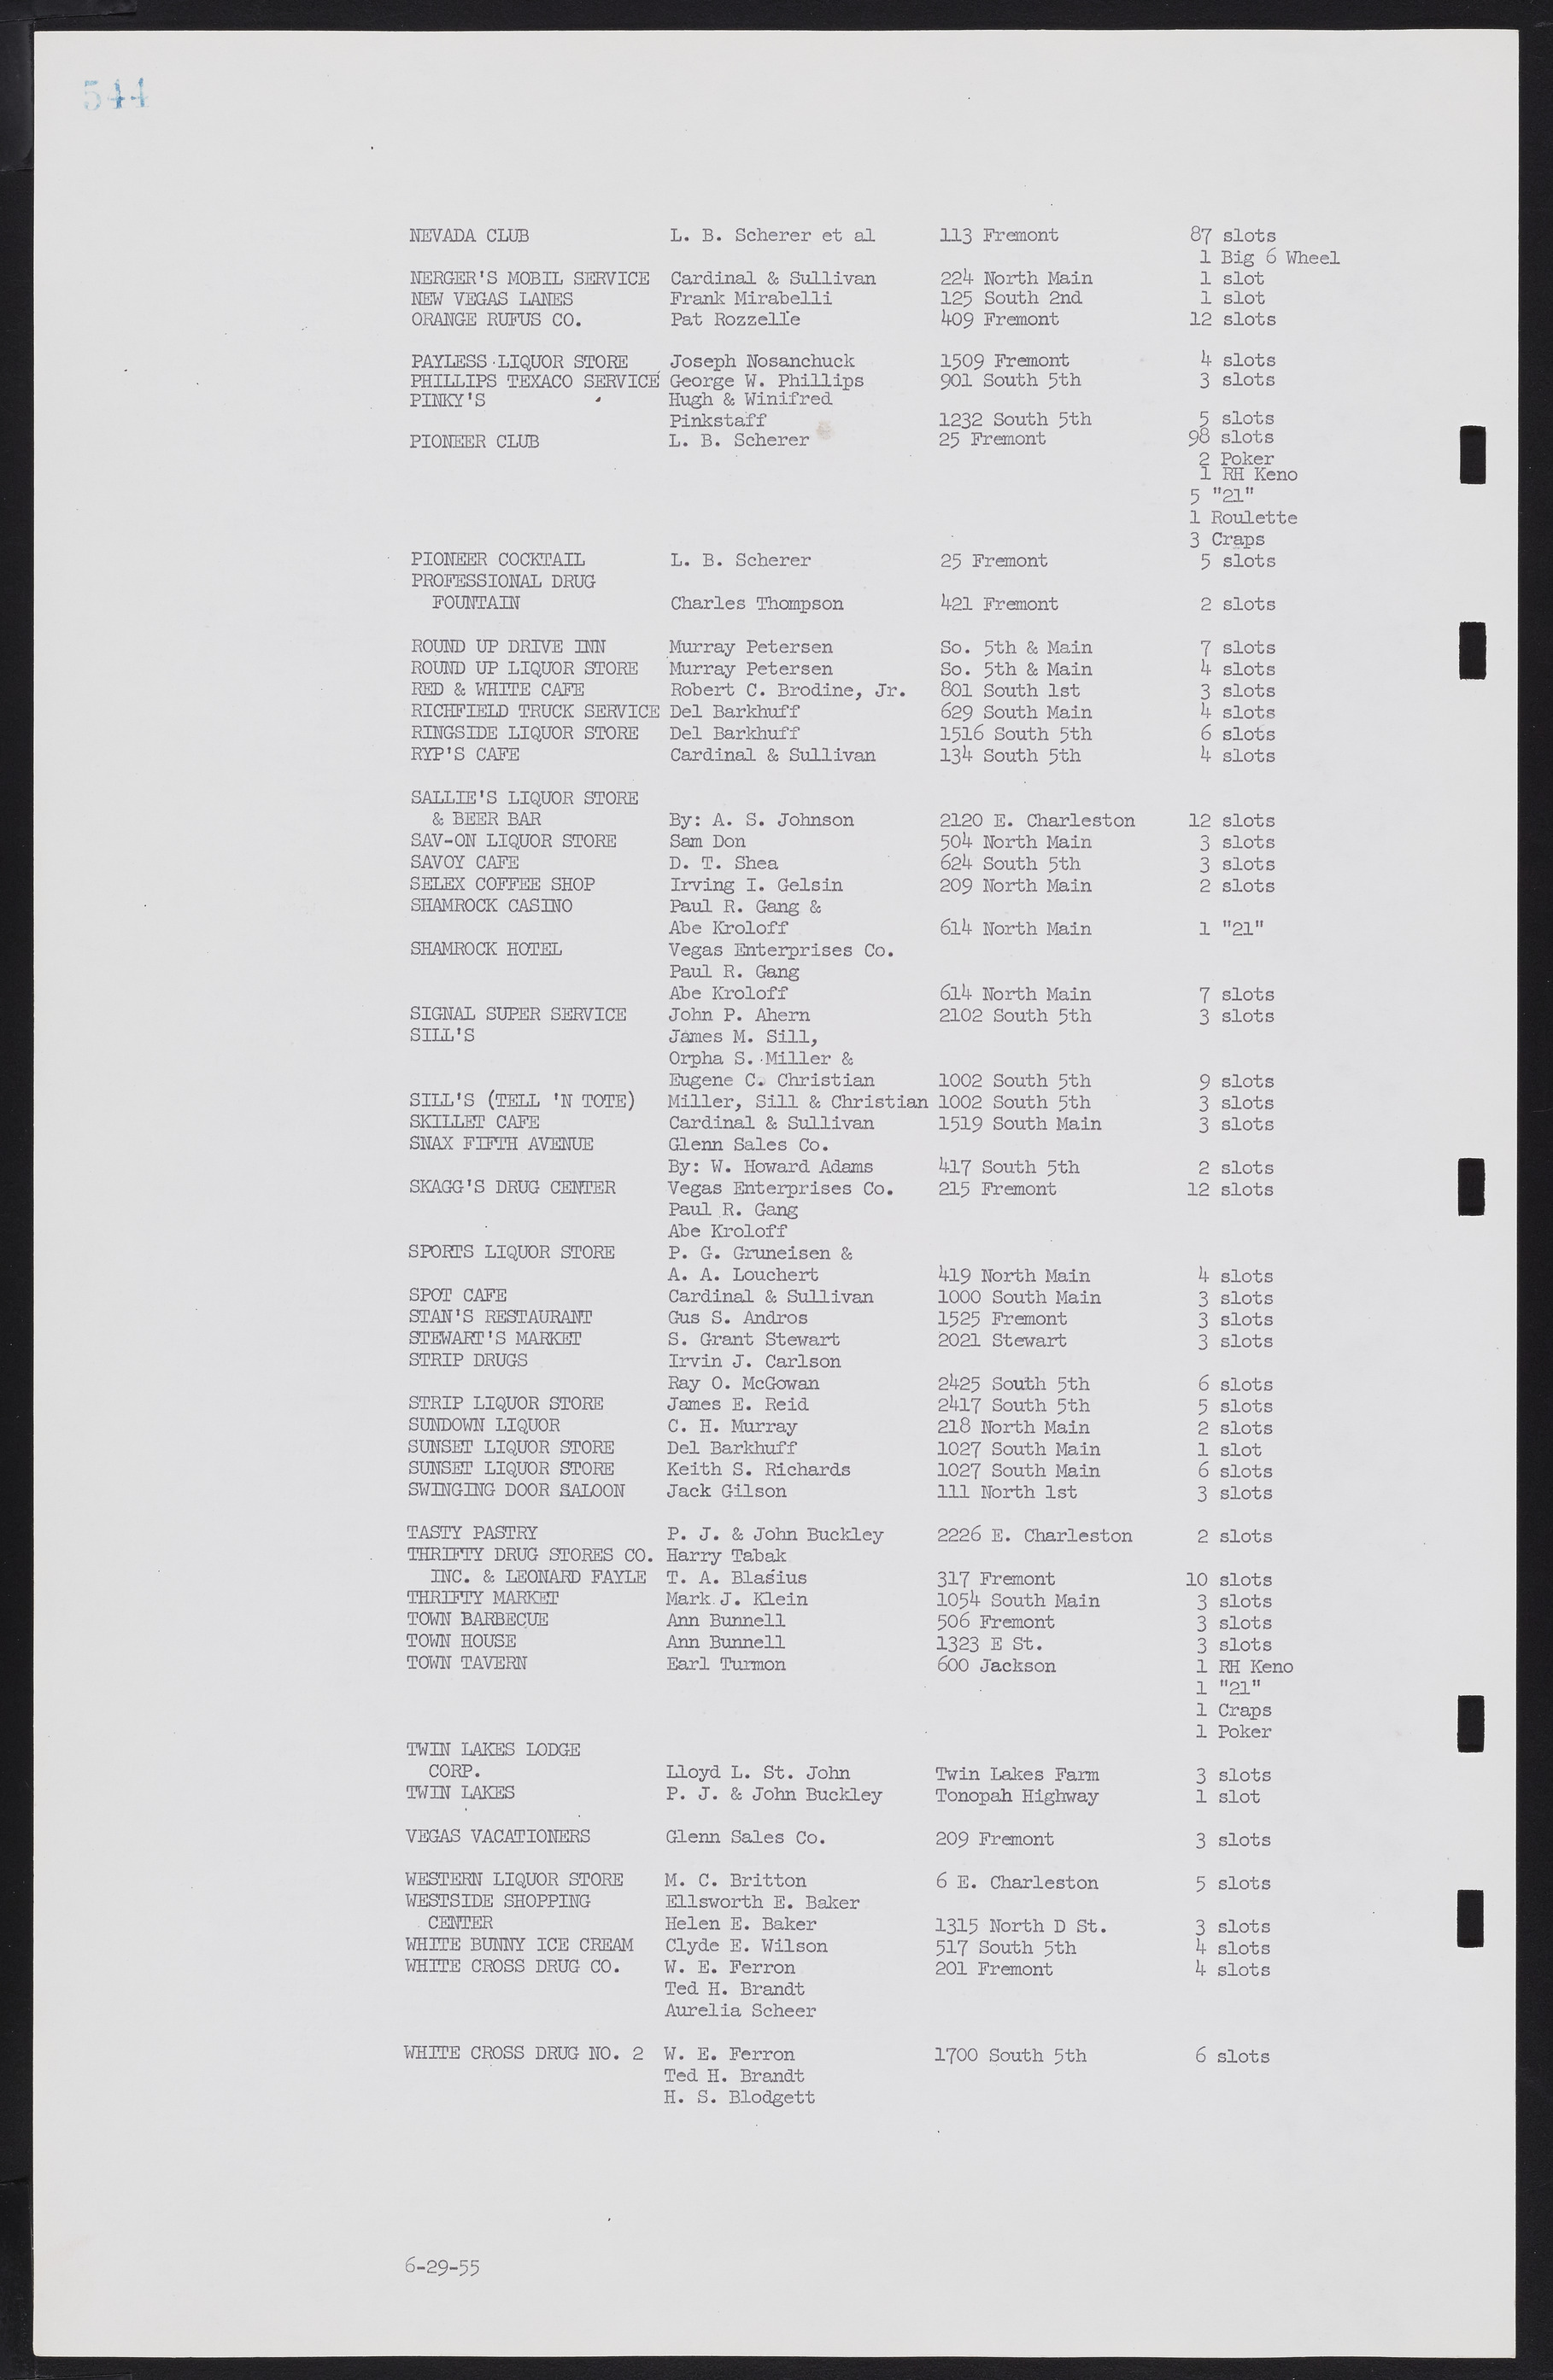 Las Vegas City Commission Minutes, February 17, 1954 to September 21, 1955, lvc000009-550